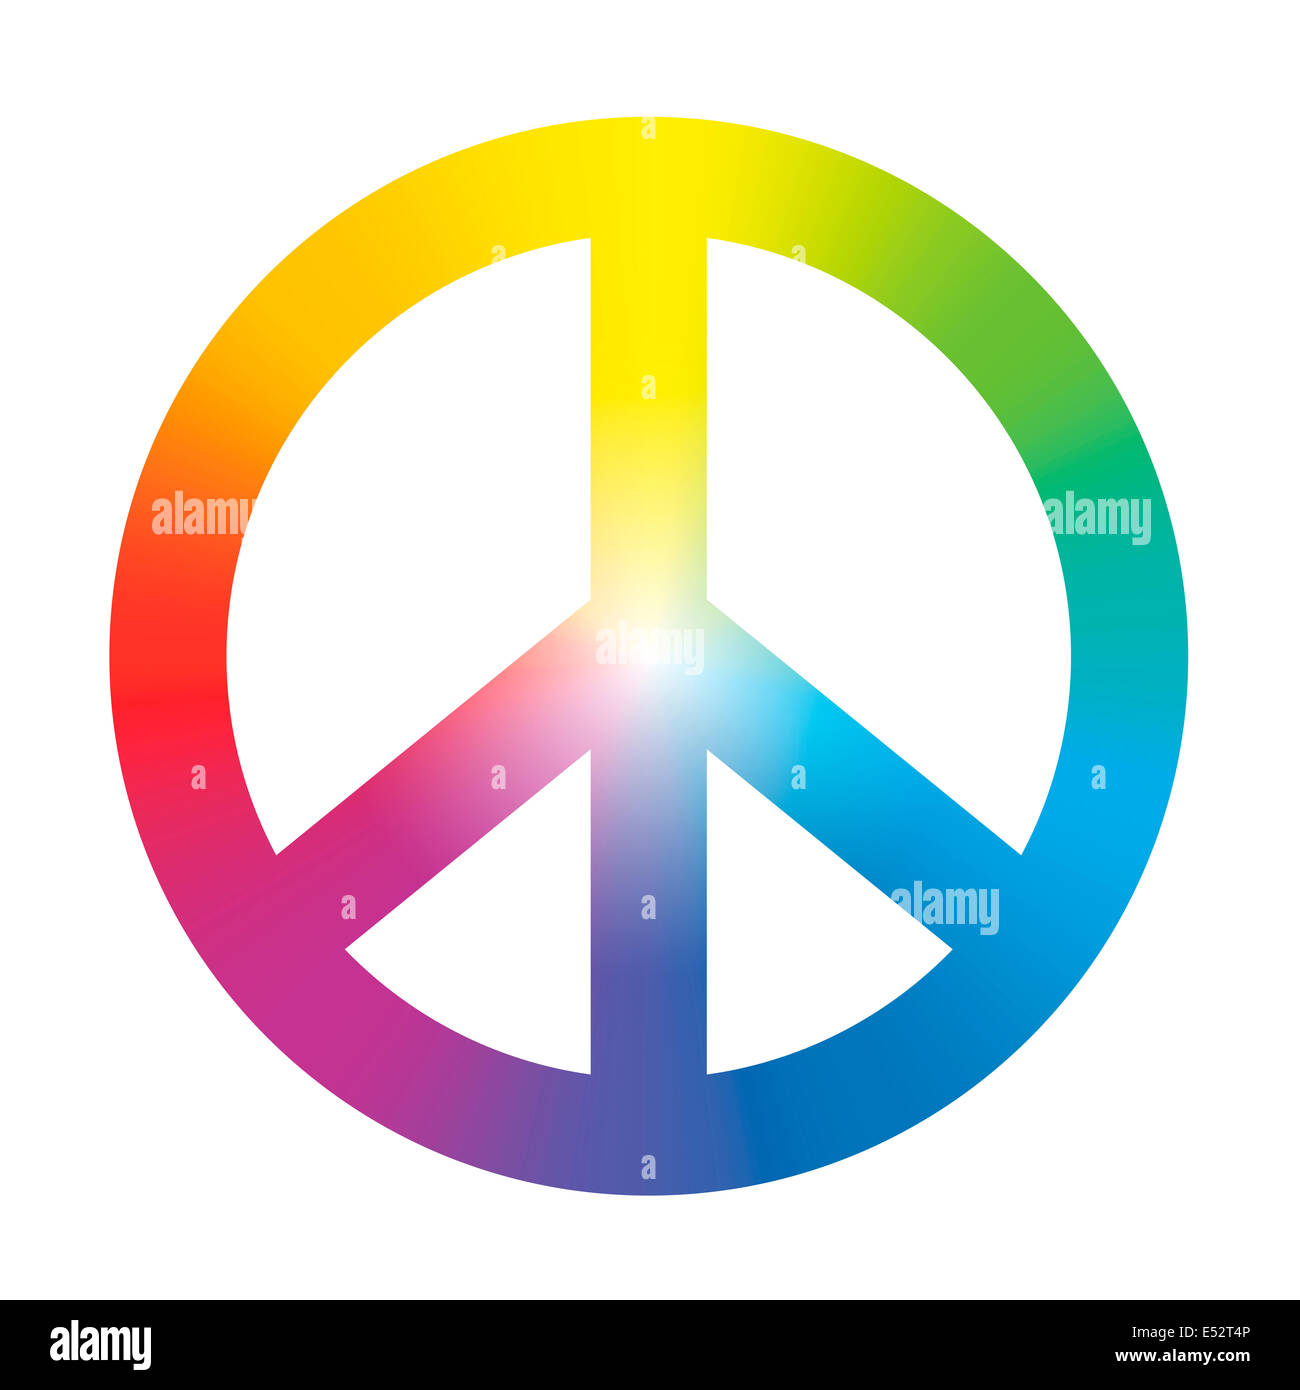 Peace symbol with circular rainbow gradient coloring. Stock Photo